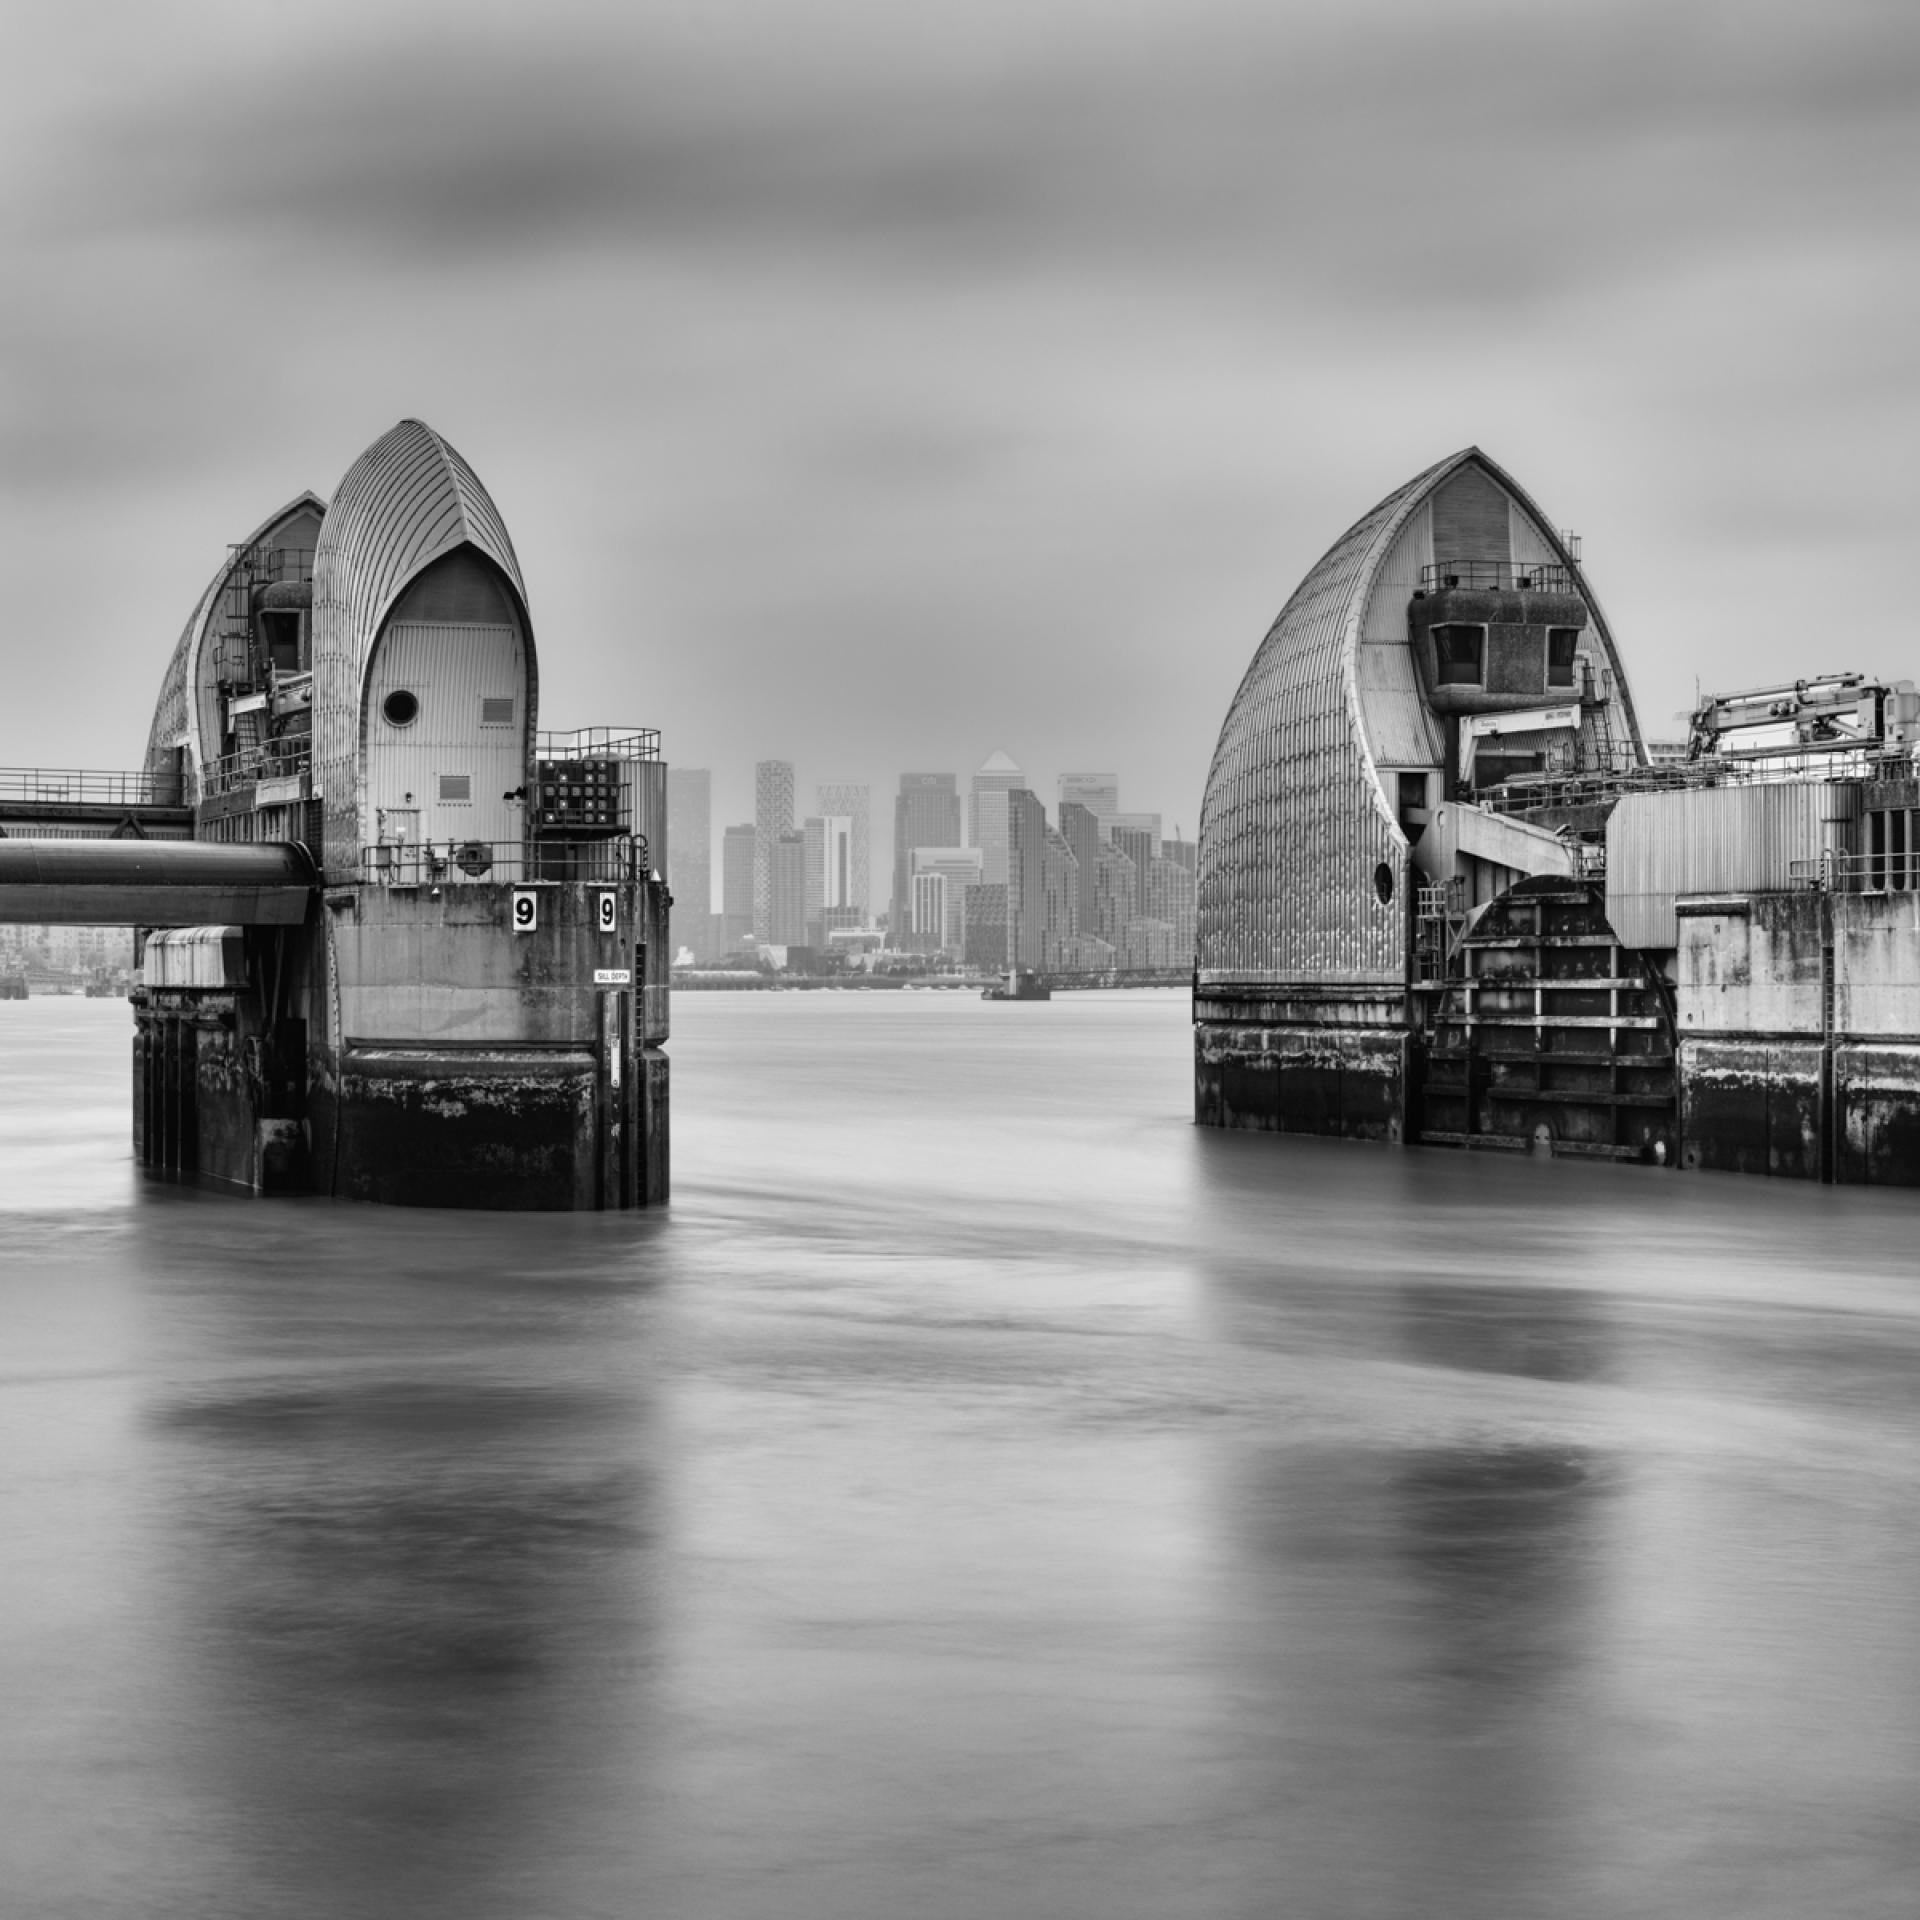 London Photography Awards Winner - Docklands Barrier